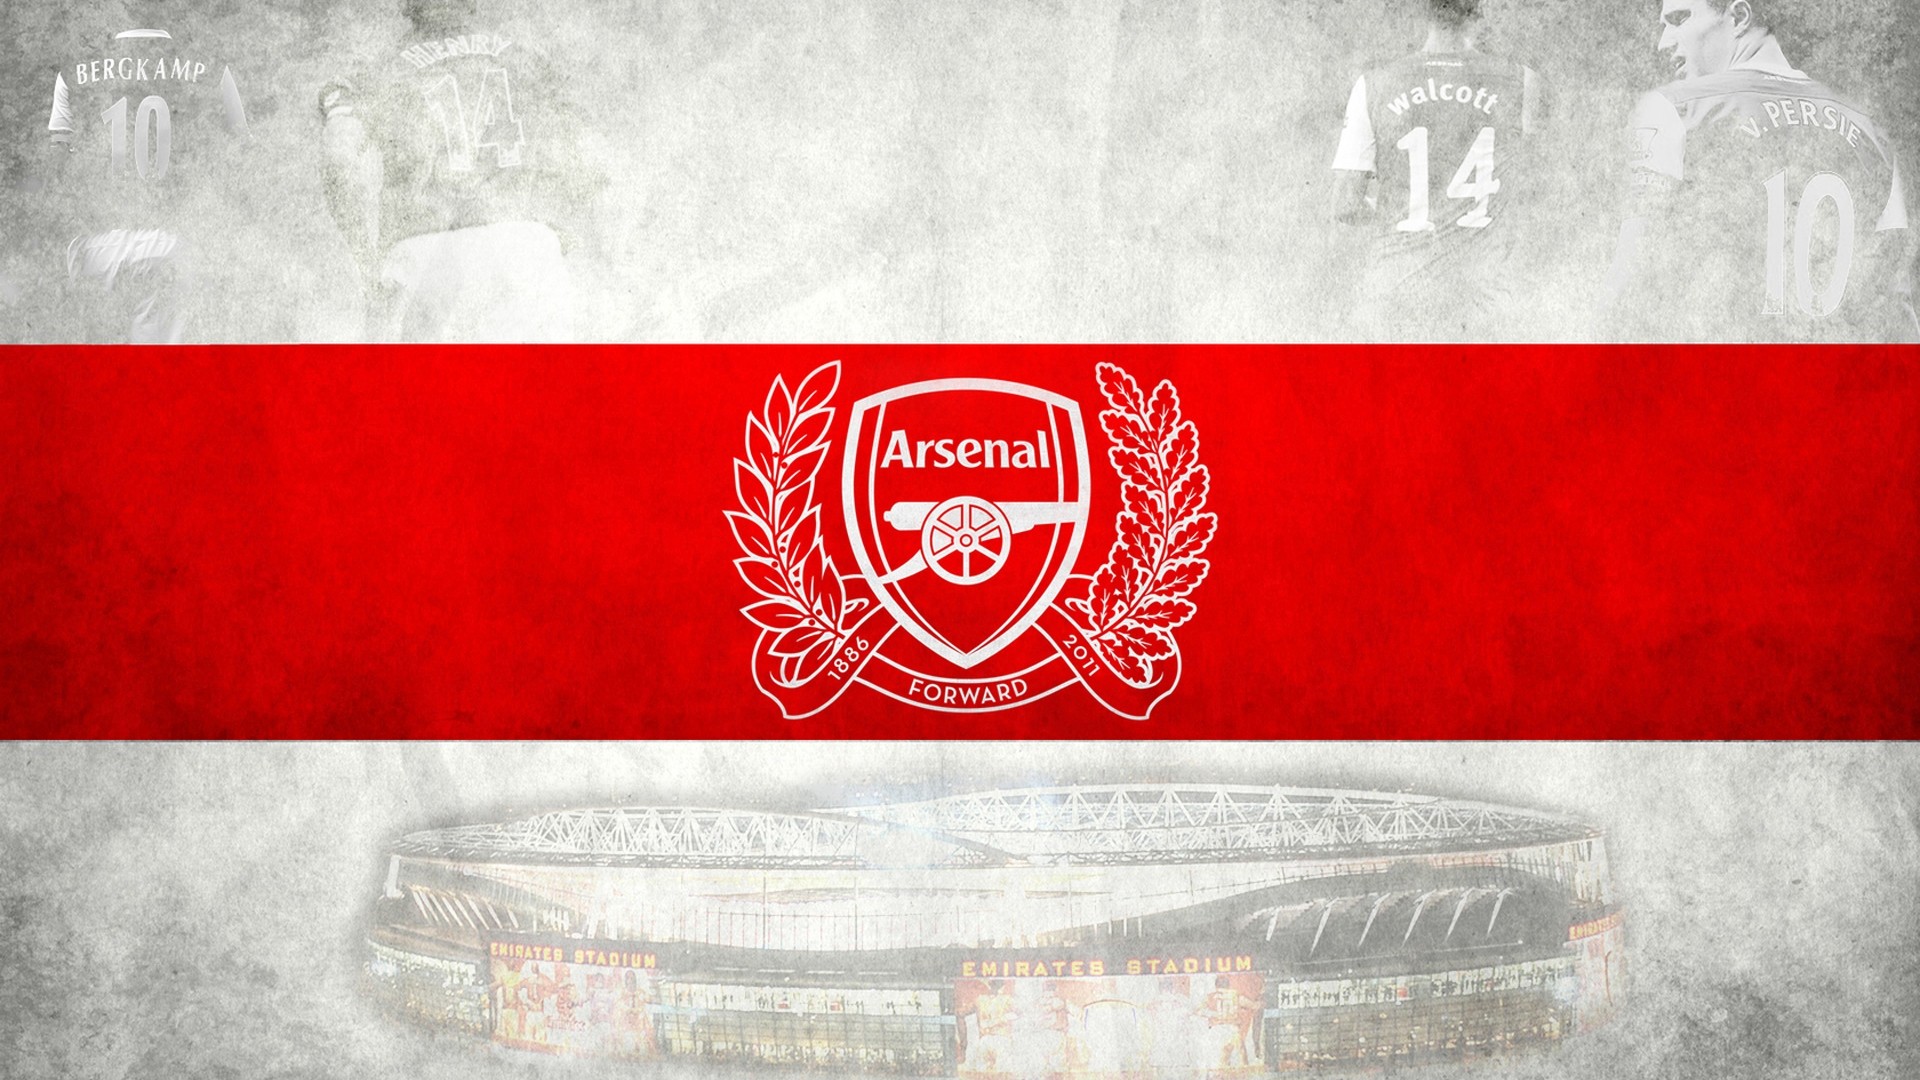 Arsenal 125 Years Annieversary Logo Background High Definition Wallpaper